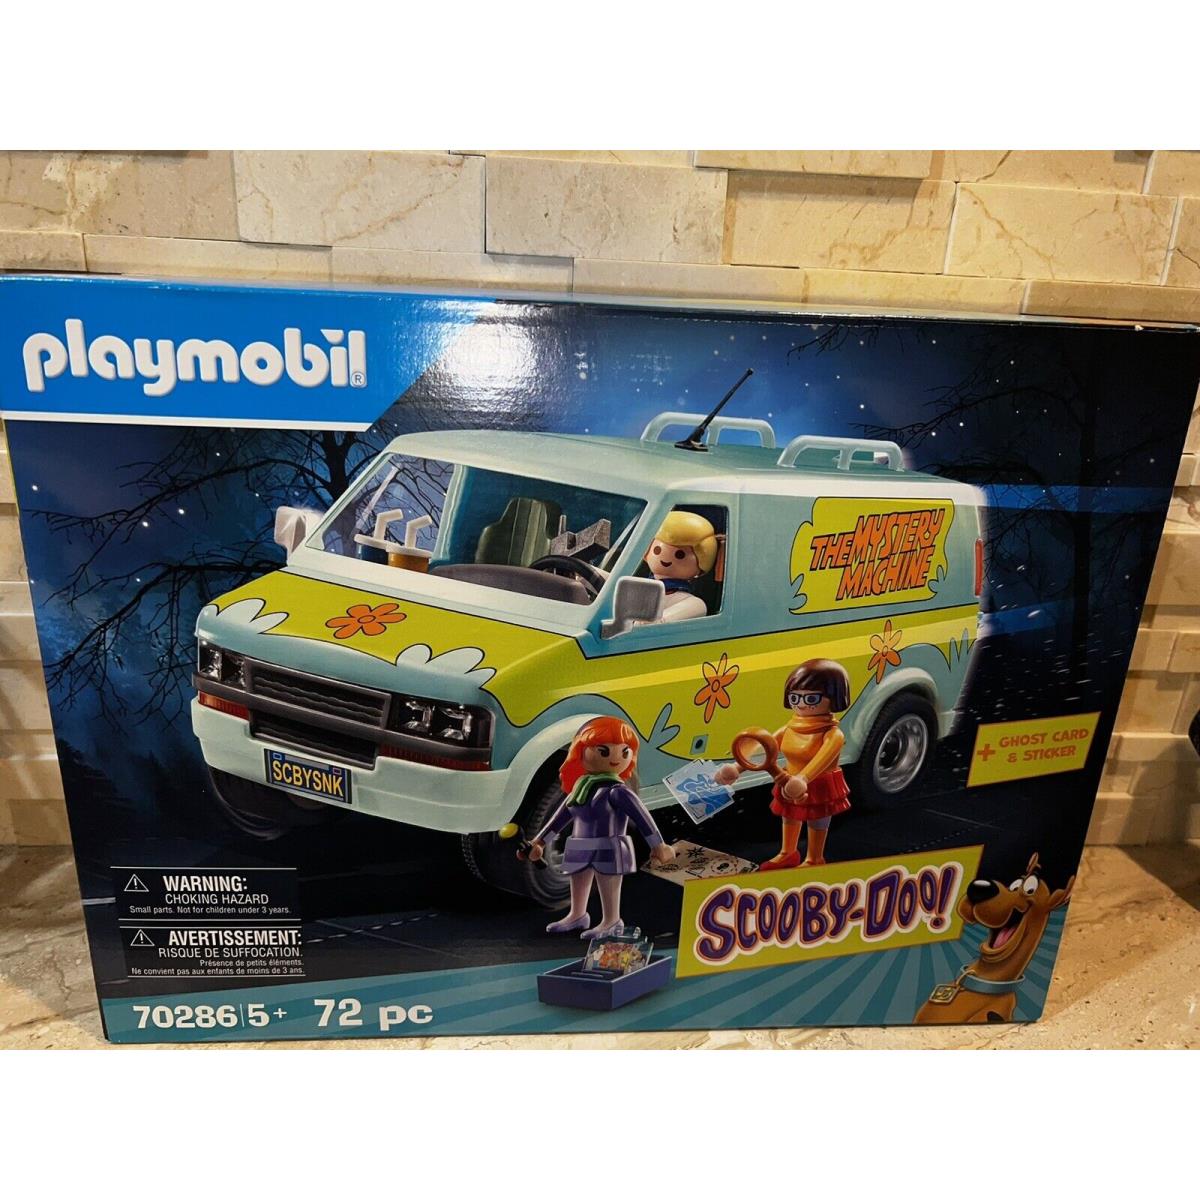 Playmobil Scooby-doo Mystery Machine Set 70286